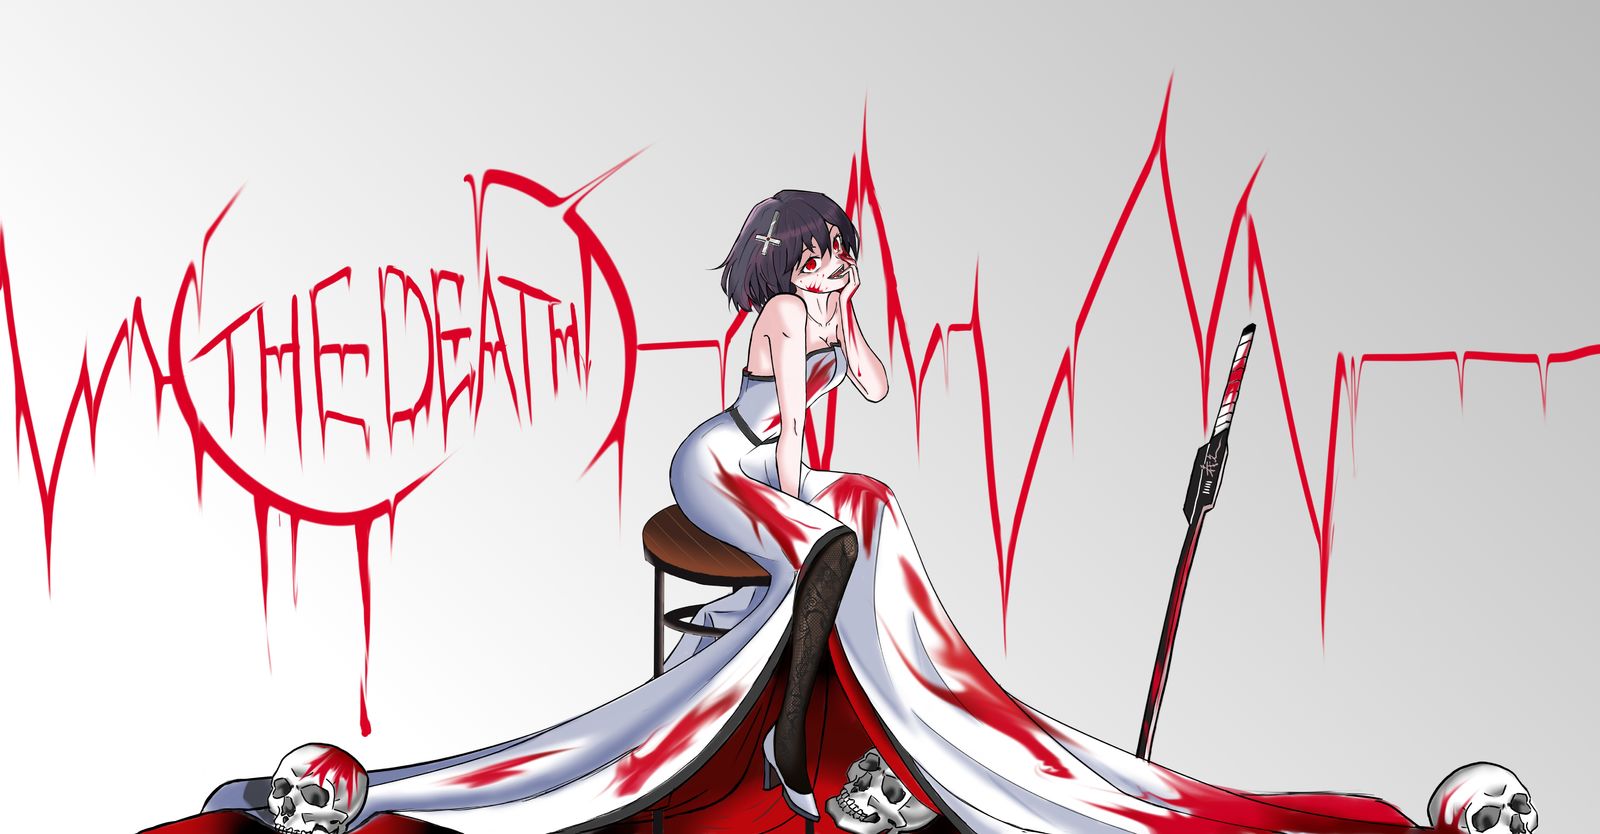 The Death插画图片壁纸